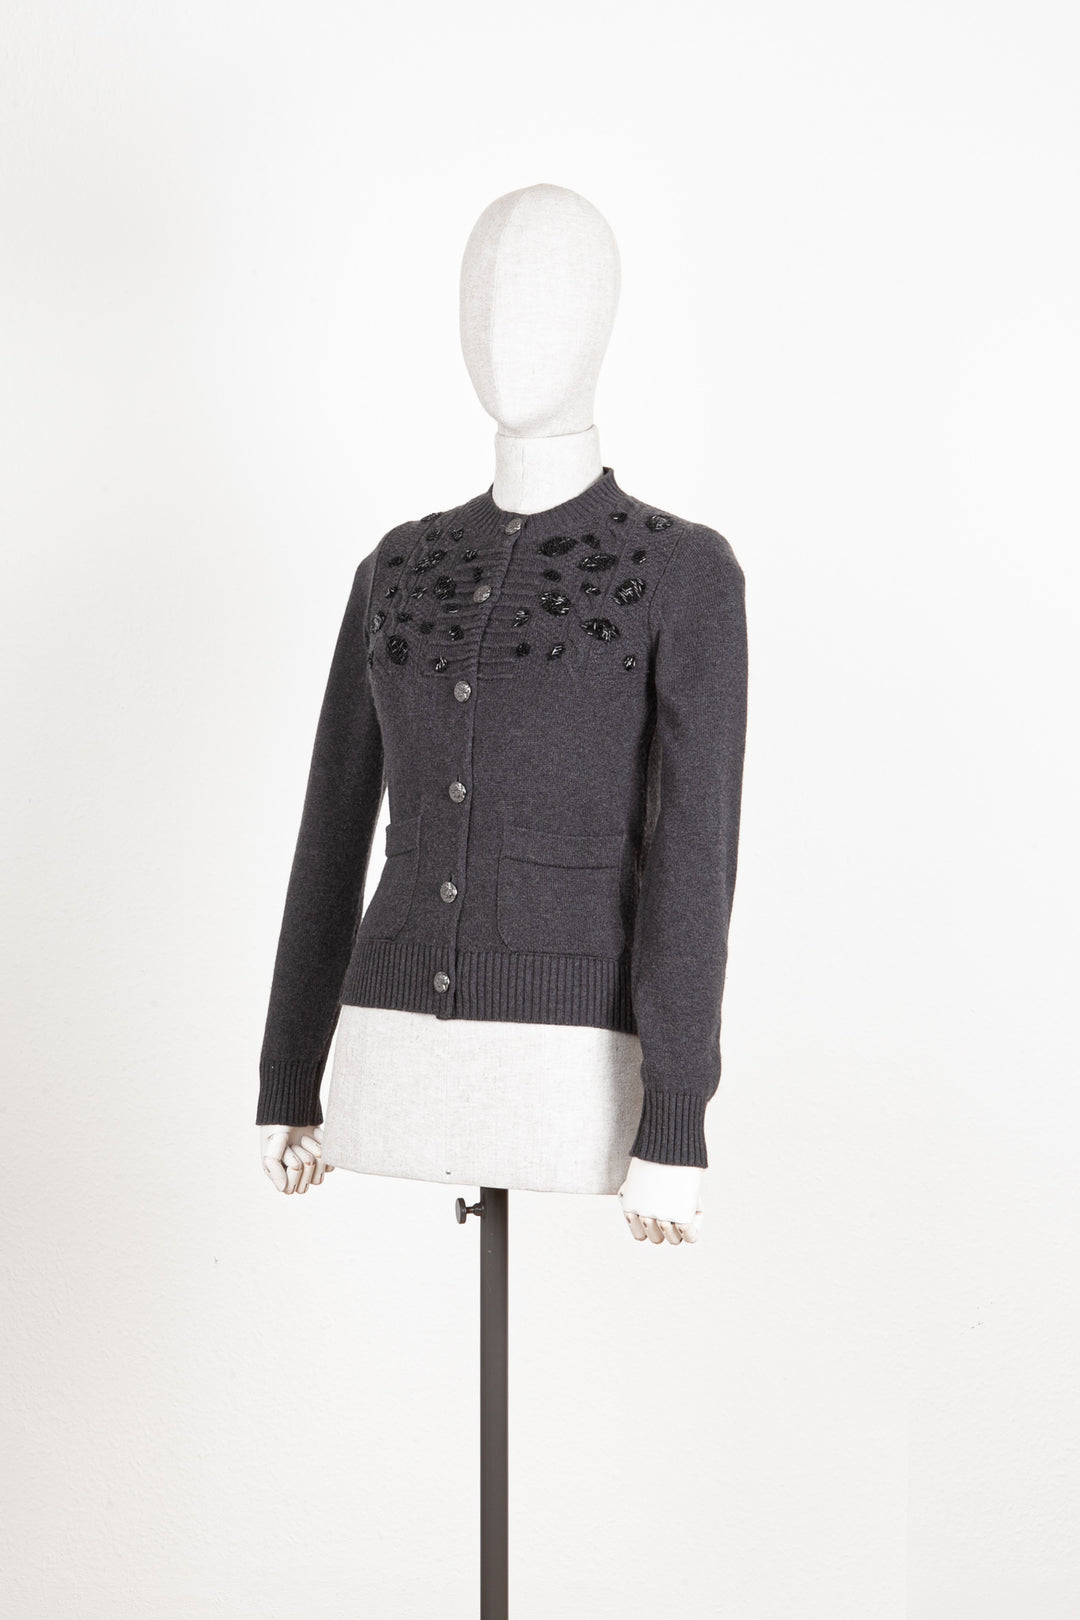 CHANEL Jacket Cashmere Knit Grey 16PF